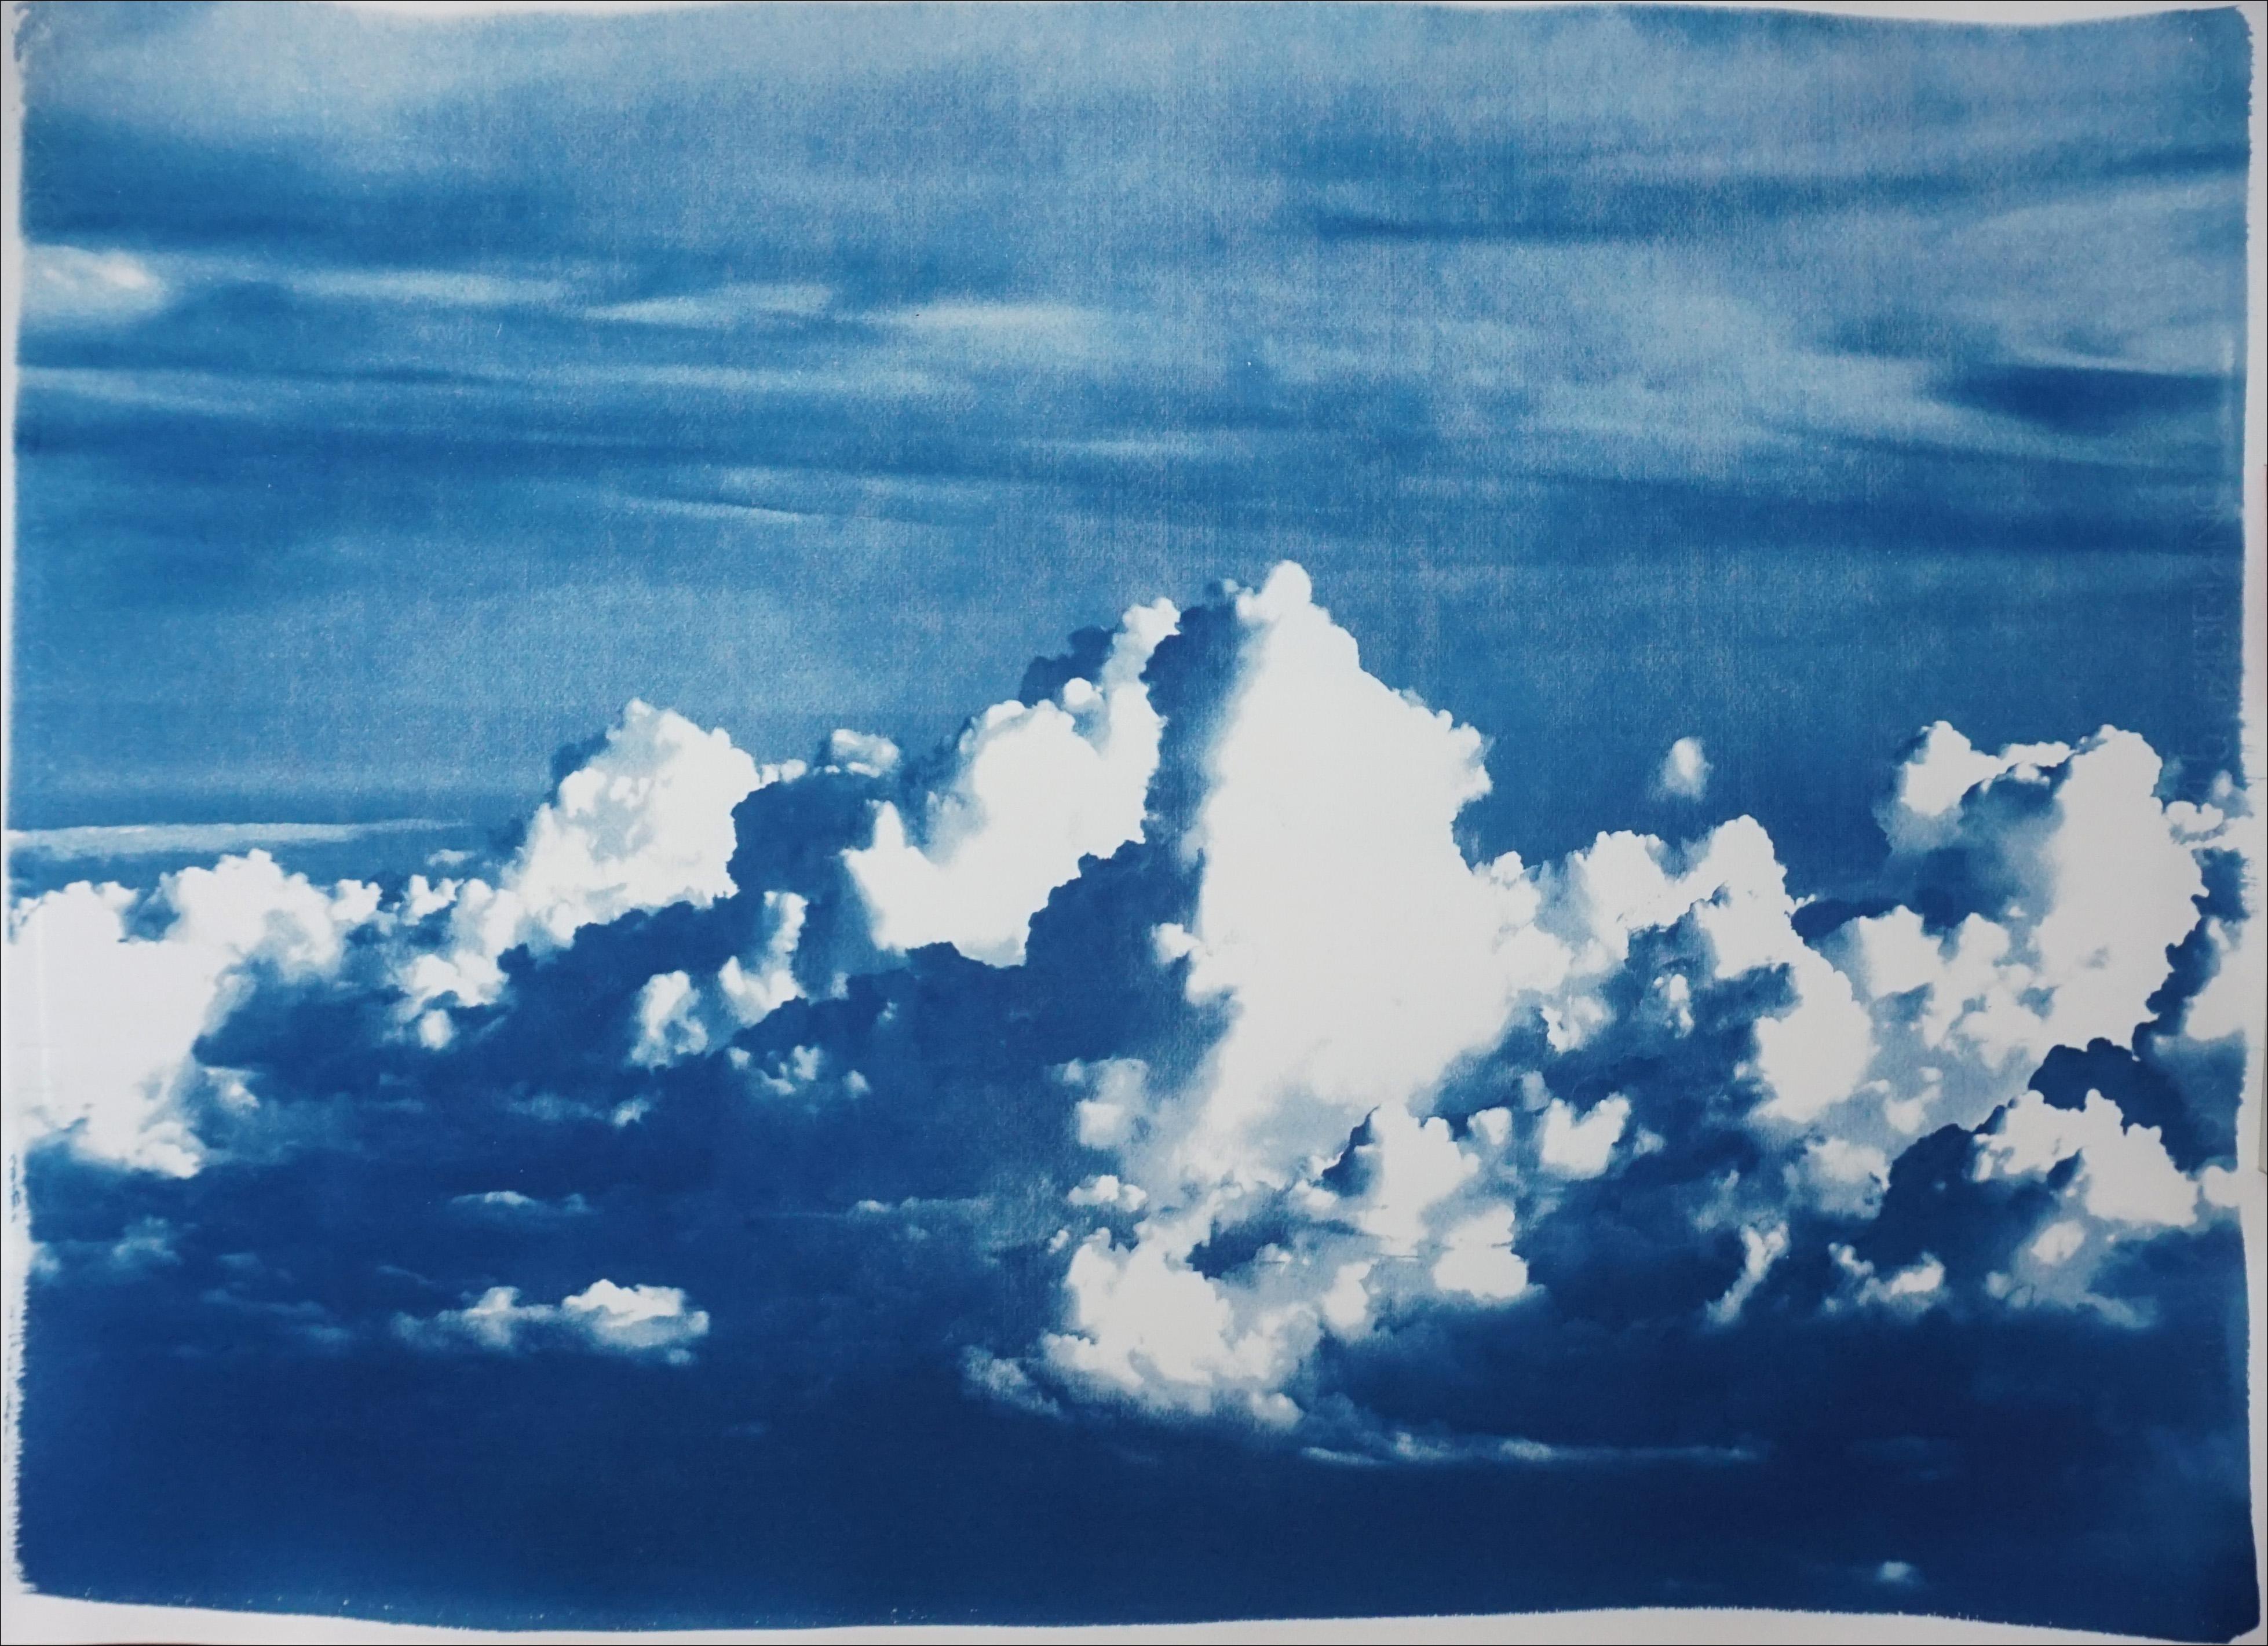 Kind of Cyan Landscape Art - Blustery Clouds After a Storm, Sky Blue Handprinted Cyanotype, Meaningful Scene